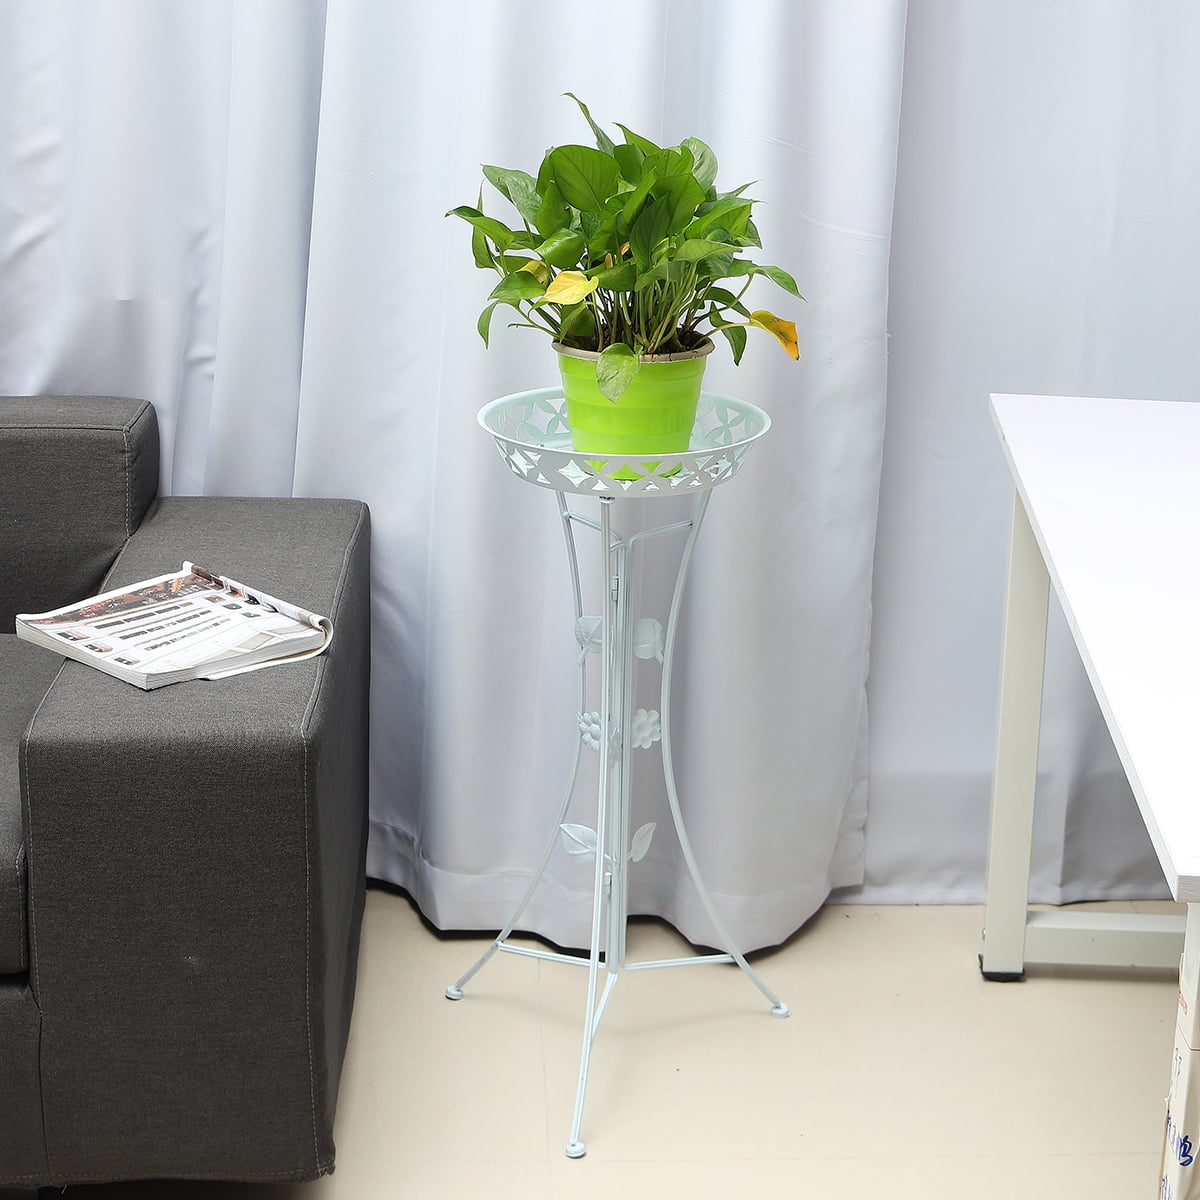 Details about   Metal Plant Pot Stand Holder Indoor Outdoor Garden Decor Flower Planter-Display 